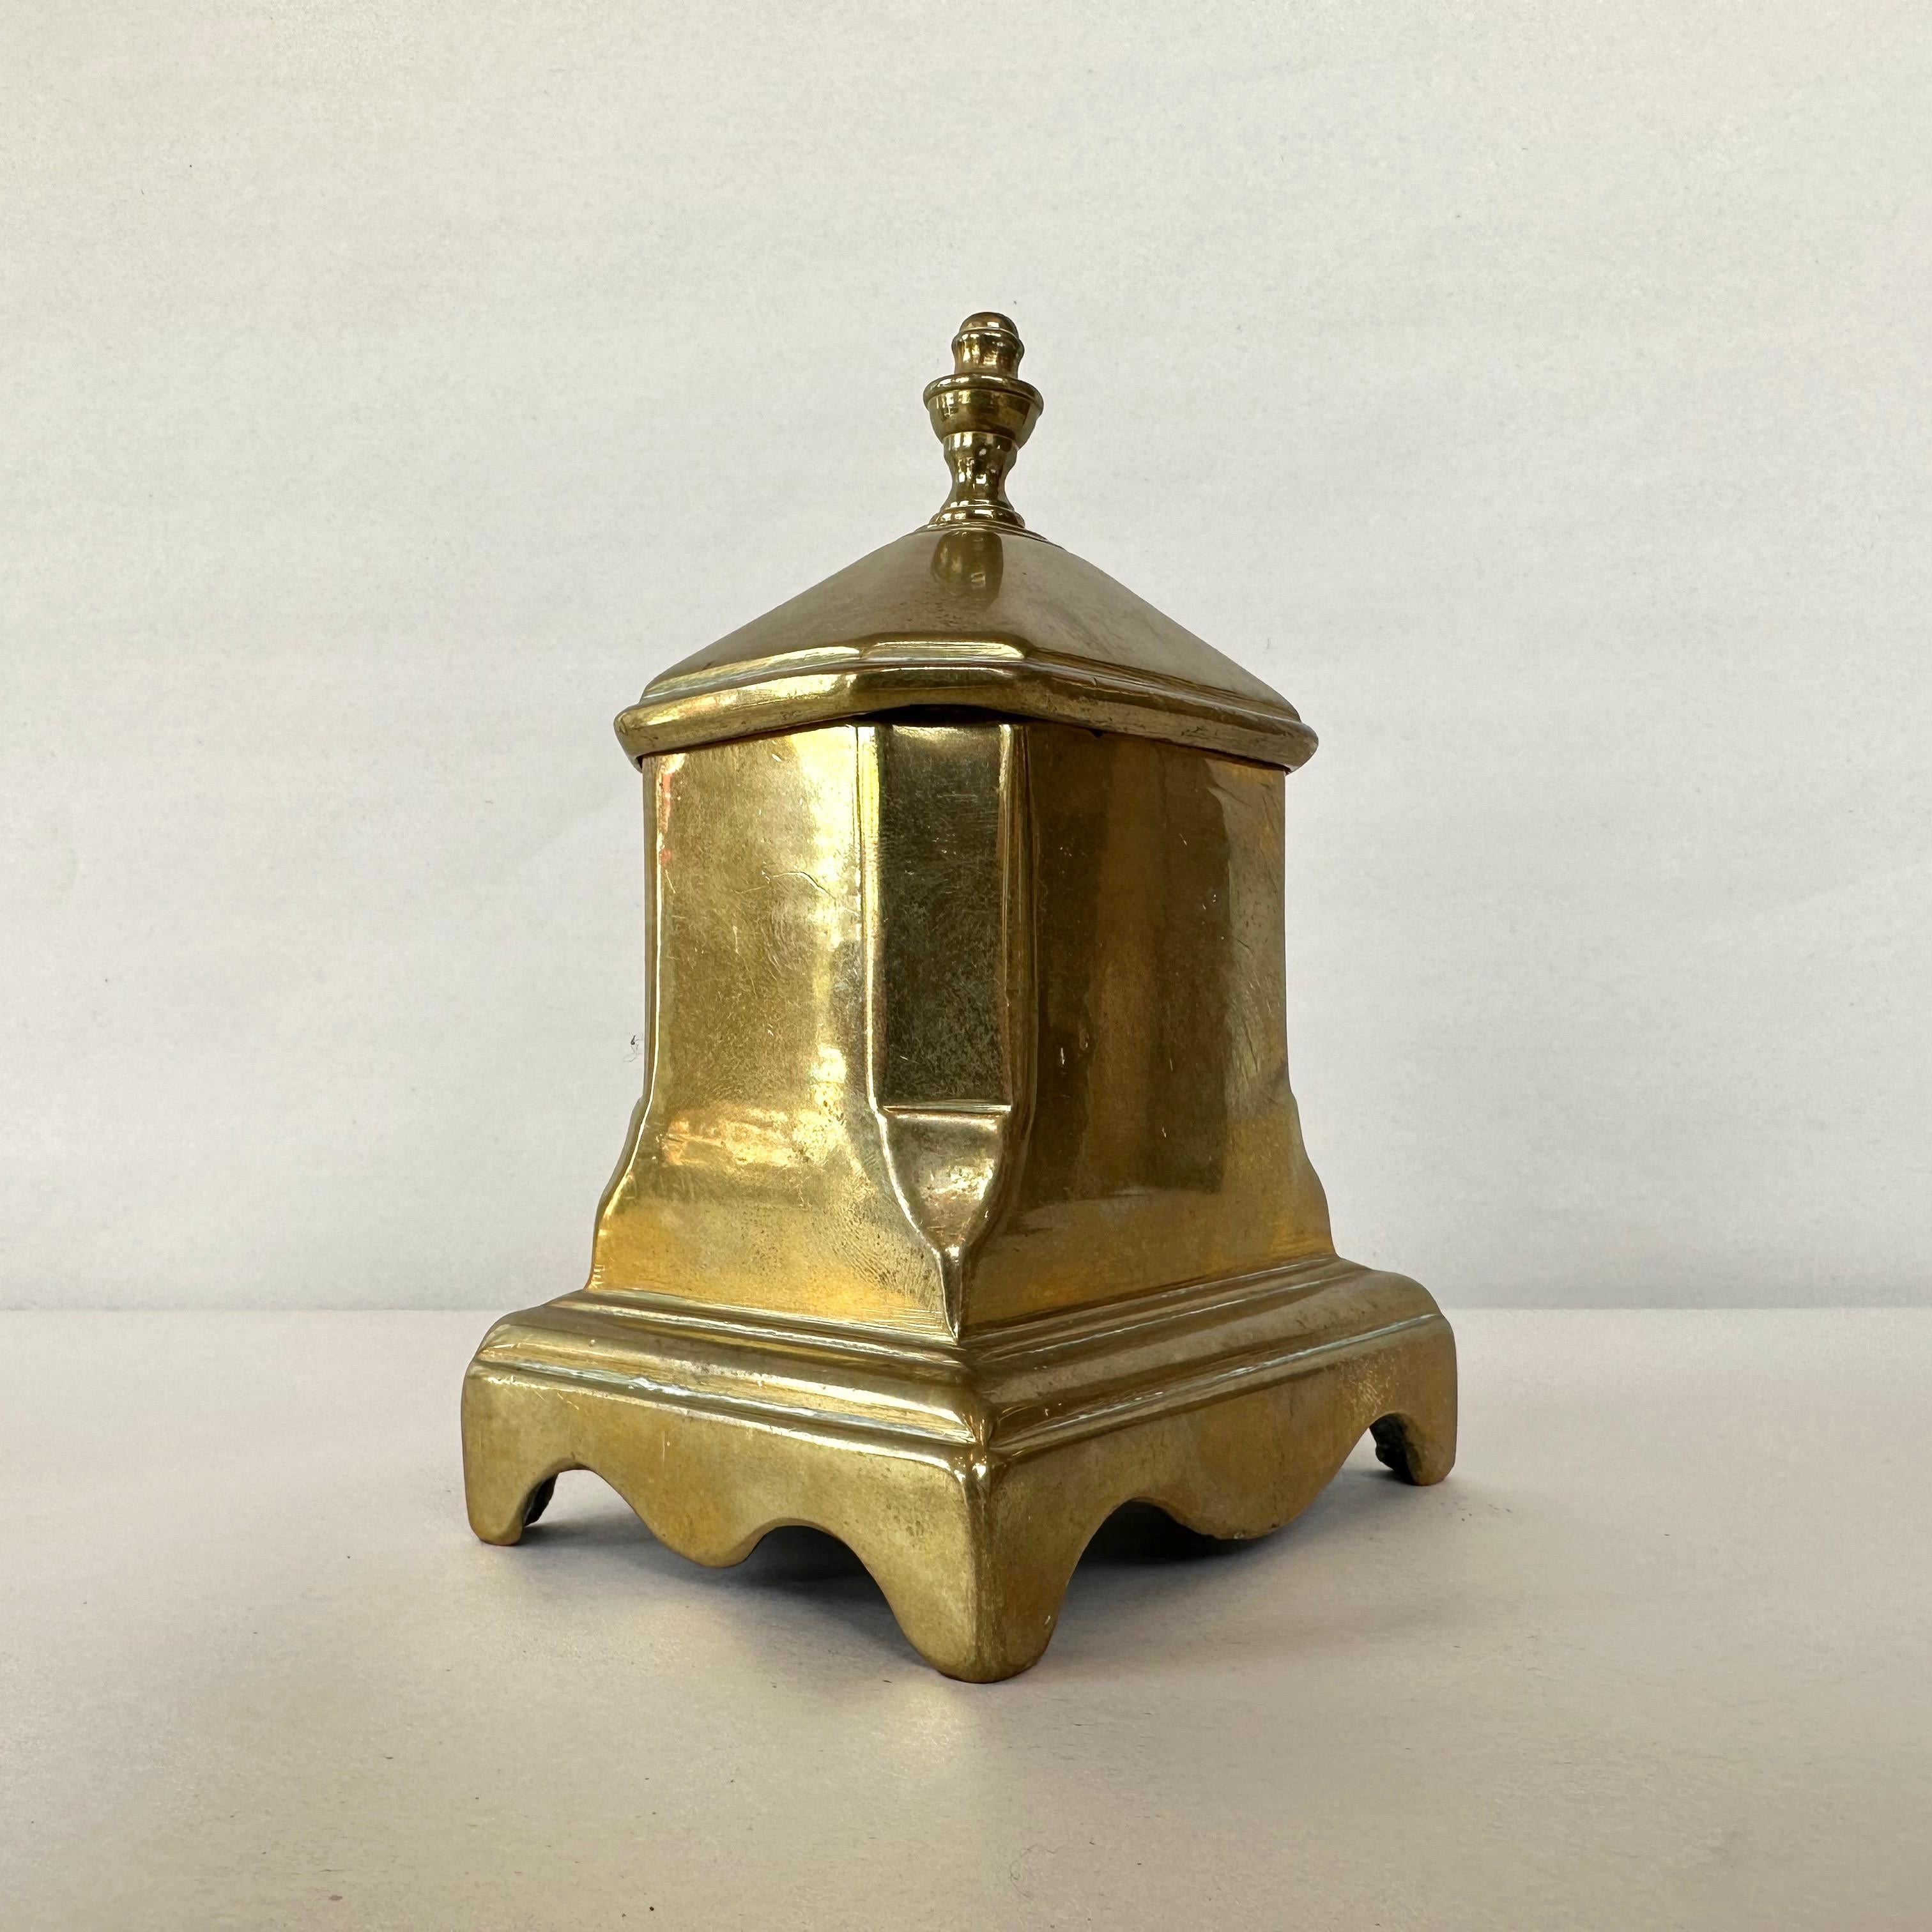 Antique American Queen Anne Period Lidded Brass Tobacco Box, circa 1750 For Sale 5